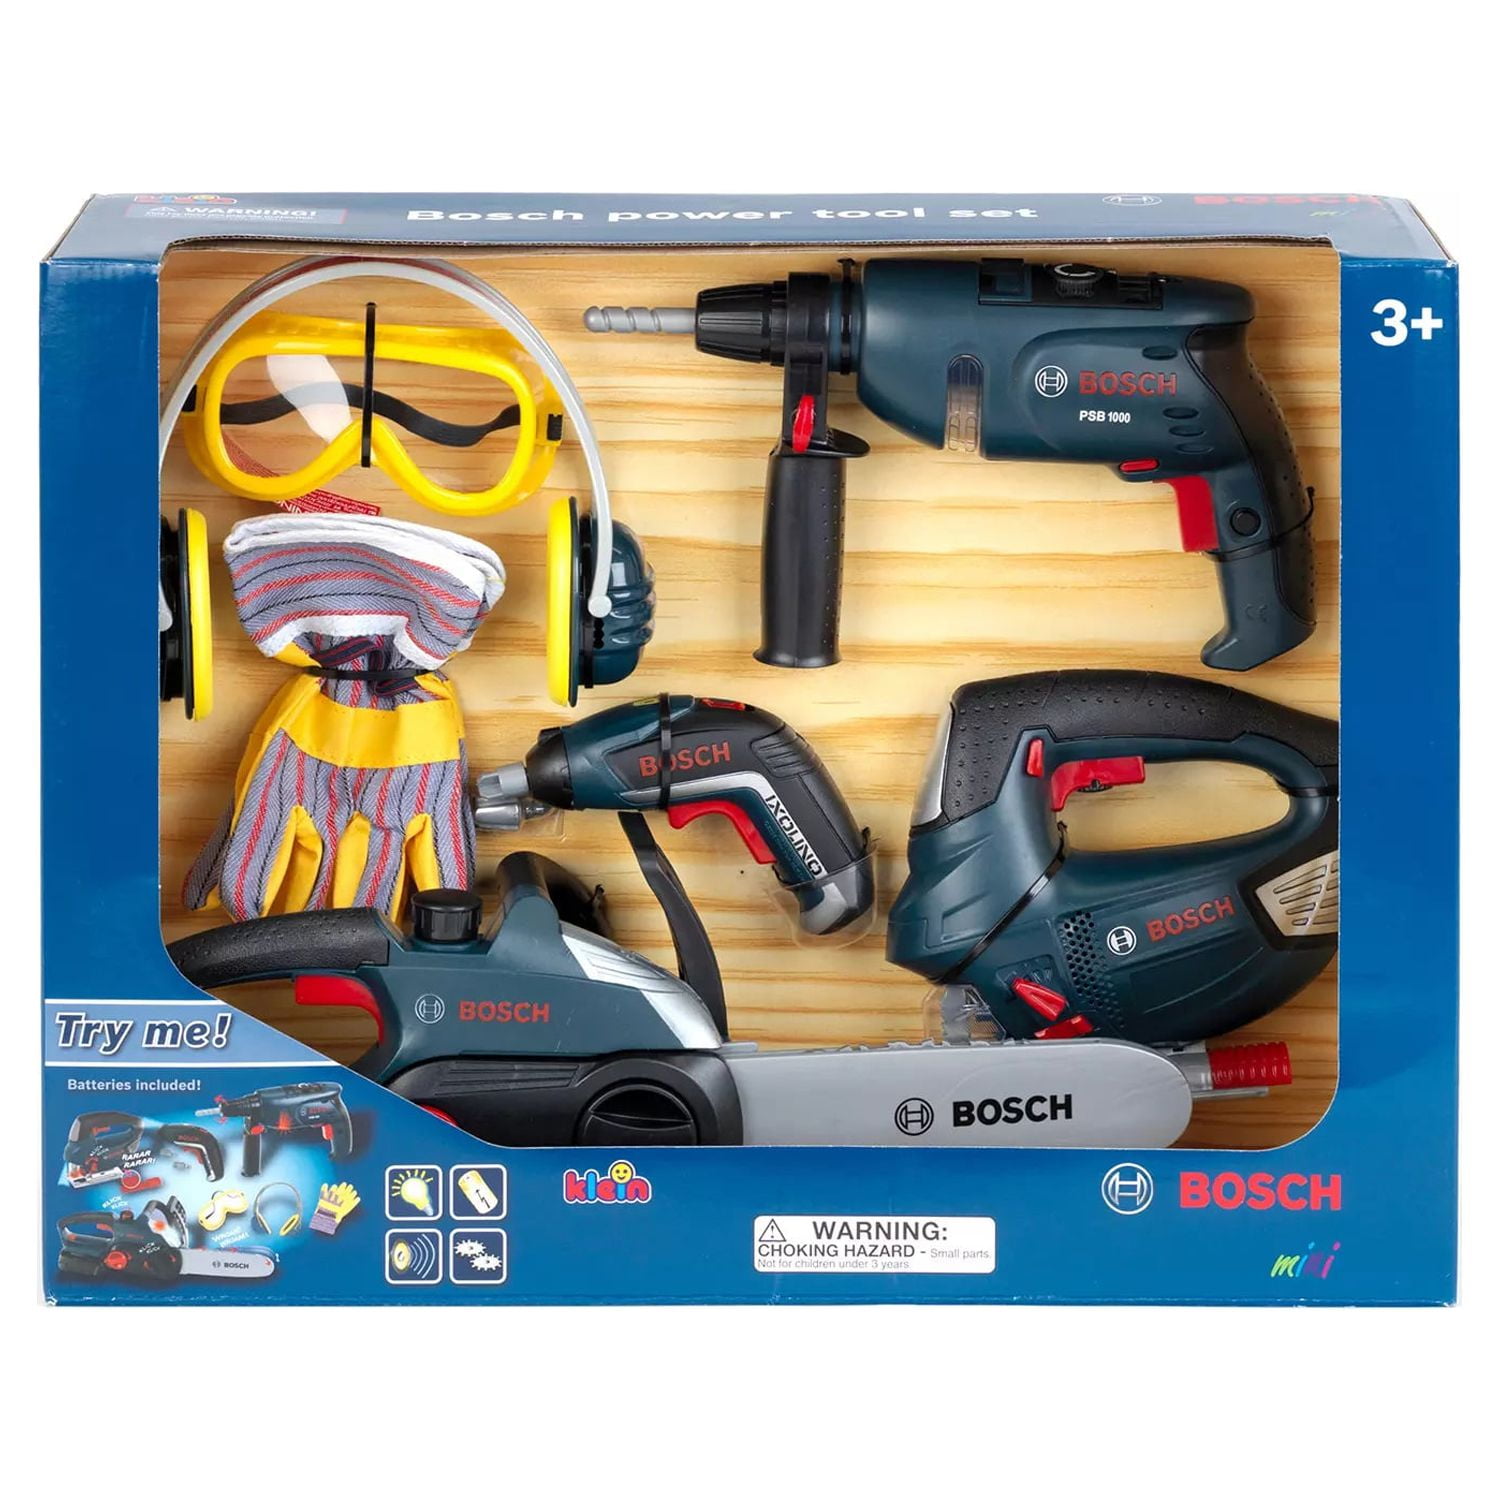 Bosch Klein Power Tool Set Safety Accessories Pretend Play Tool Kids Junior SM8 08134 - Walmart.com